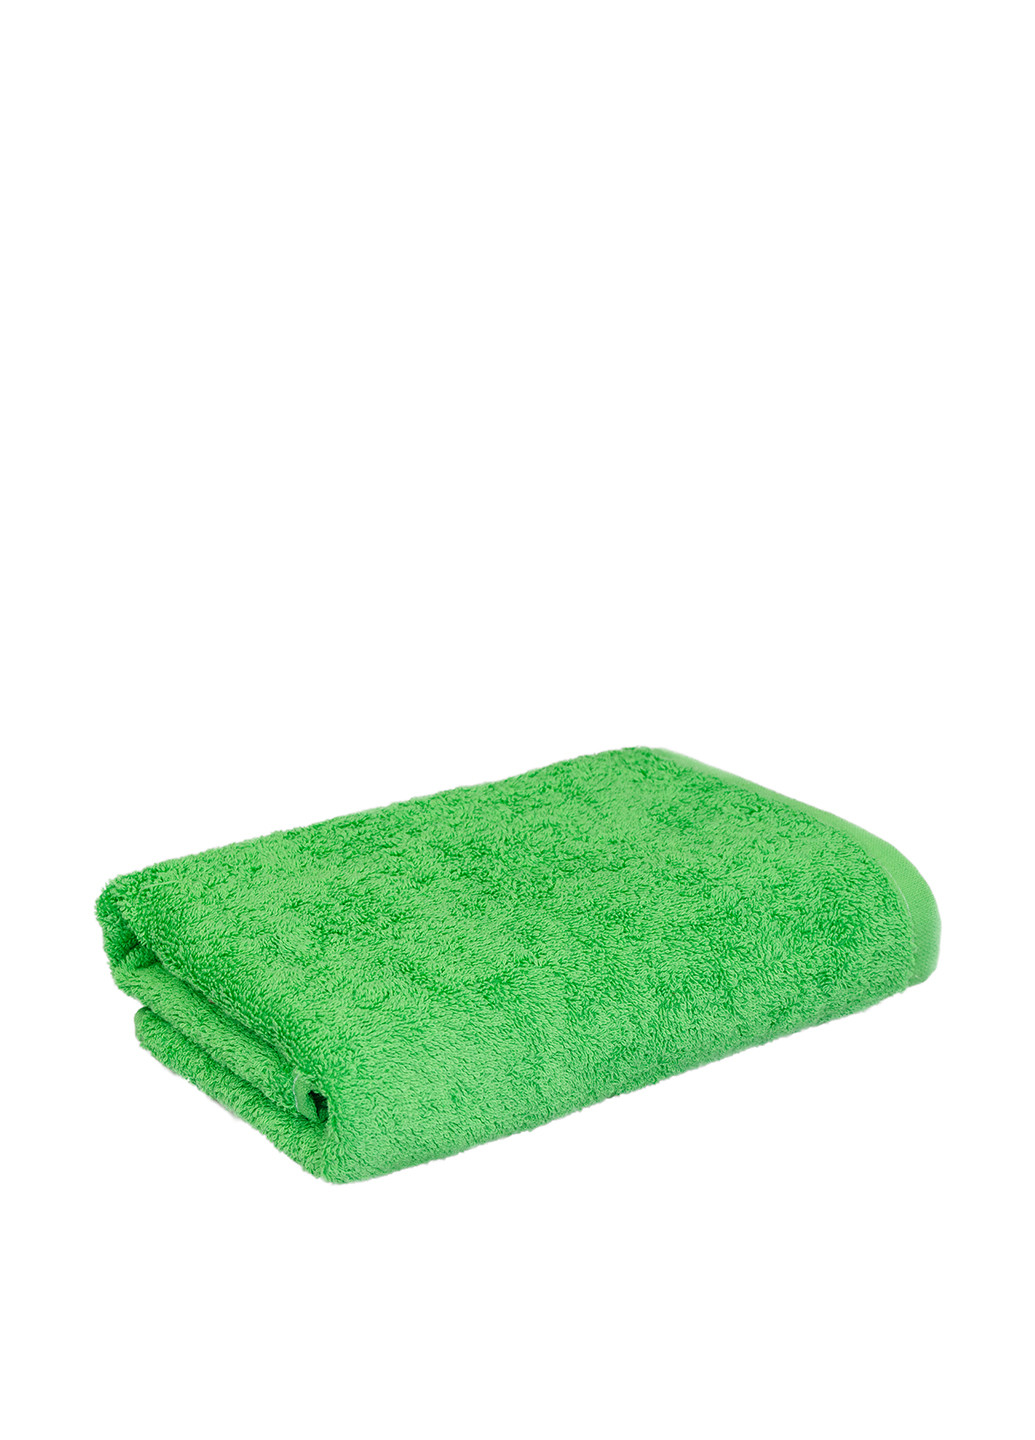 No Brand полотенце, 50х90 см однотонный зеленый производство - Туркменистан